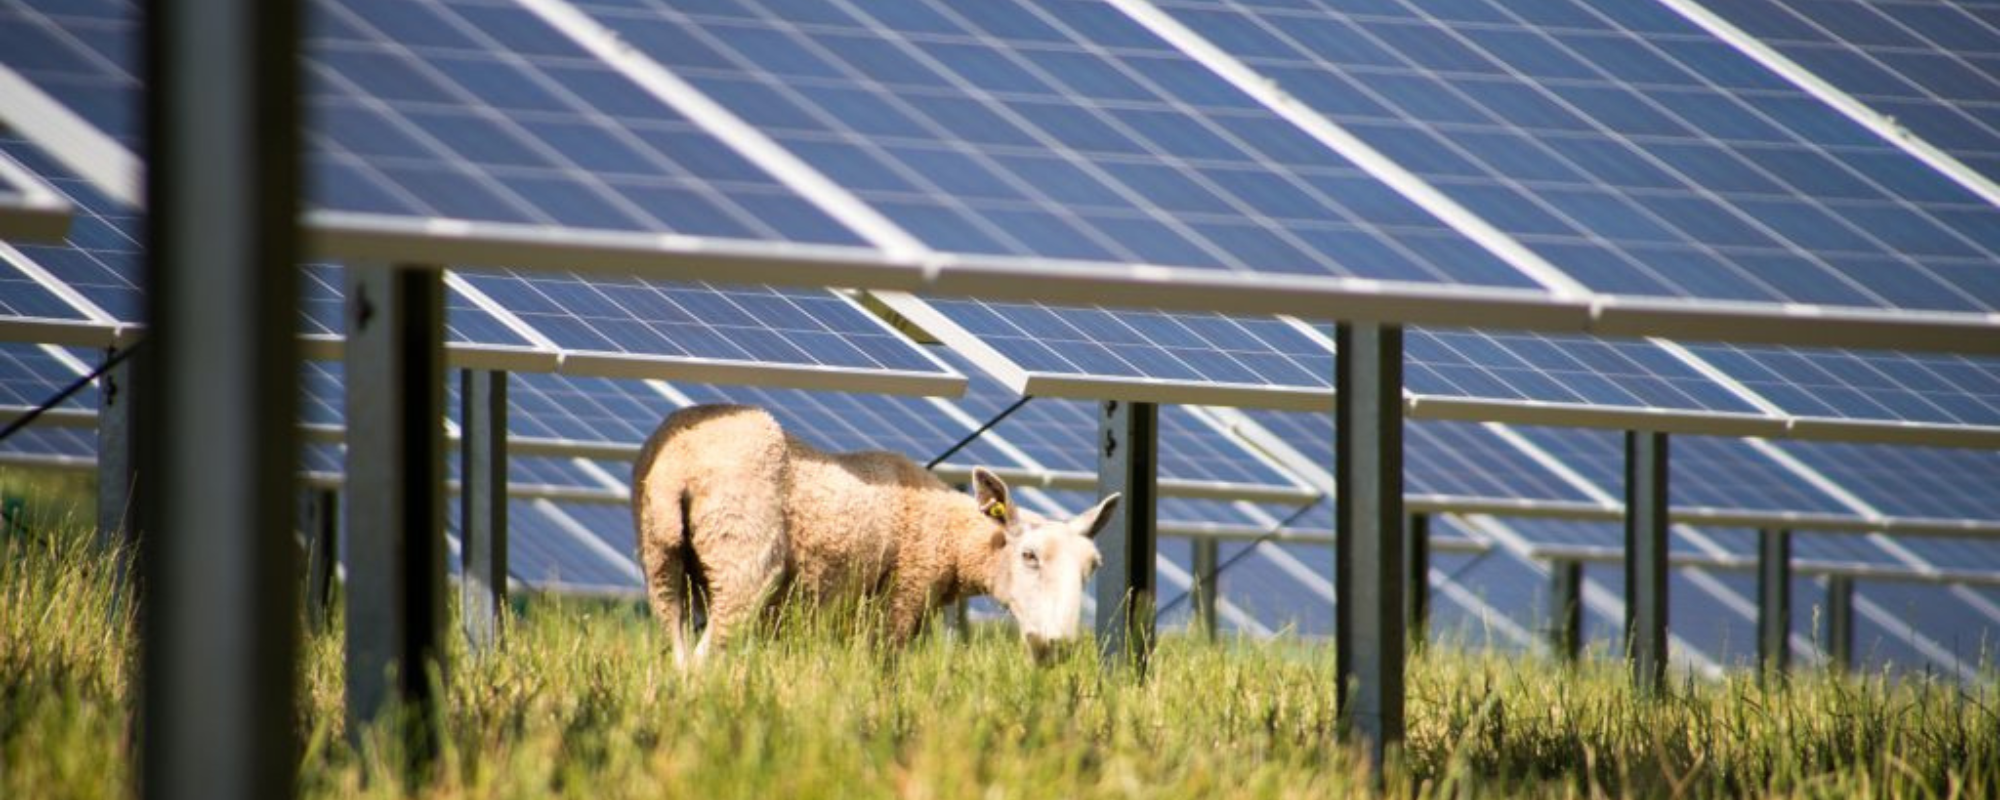 Sheep grazing under solar panel